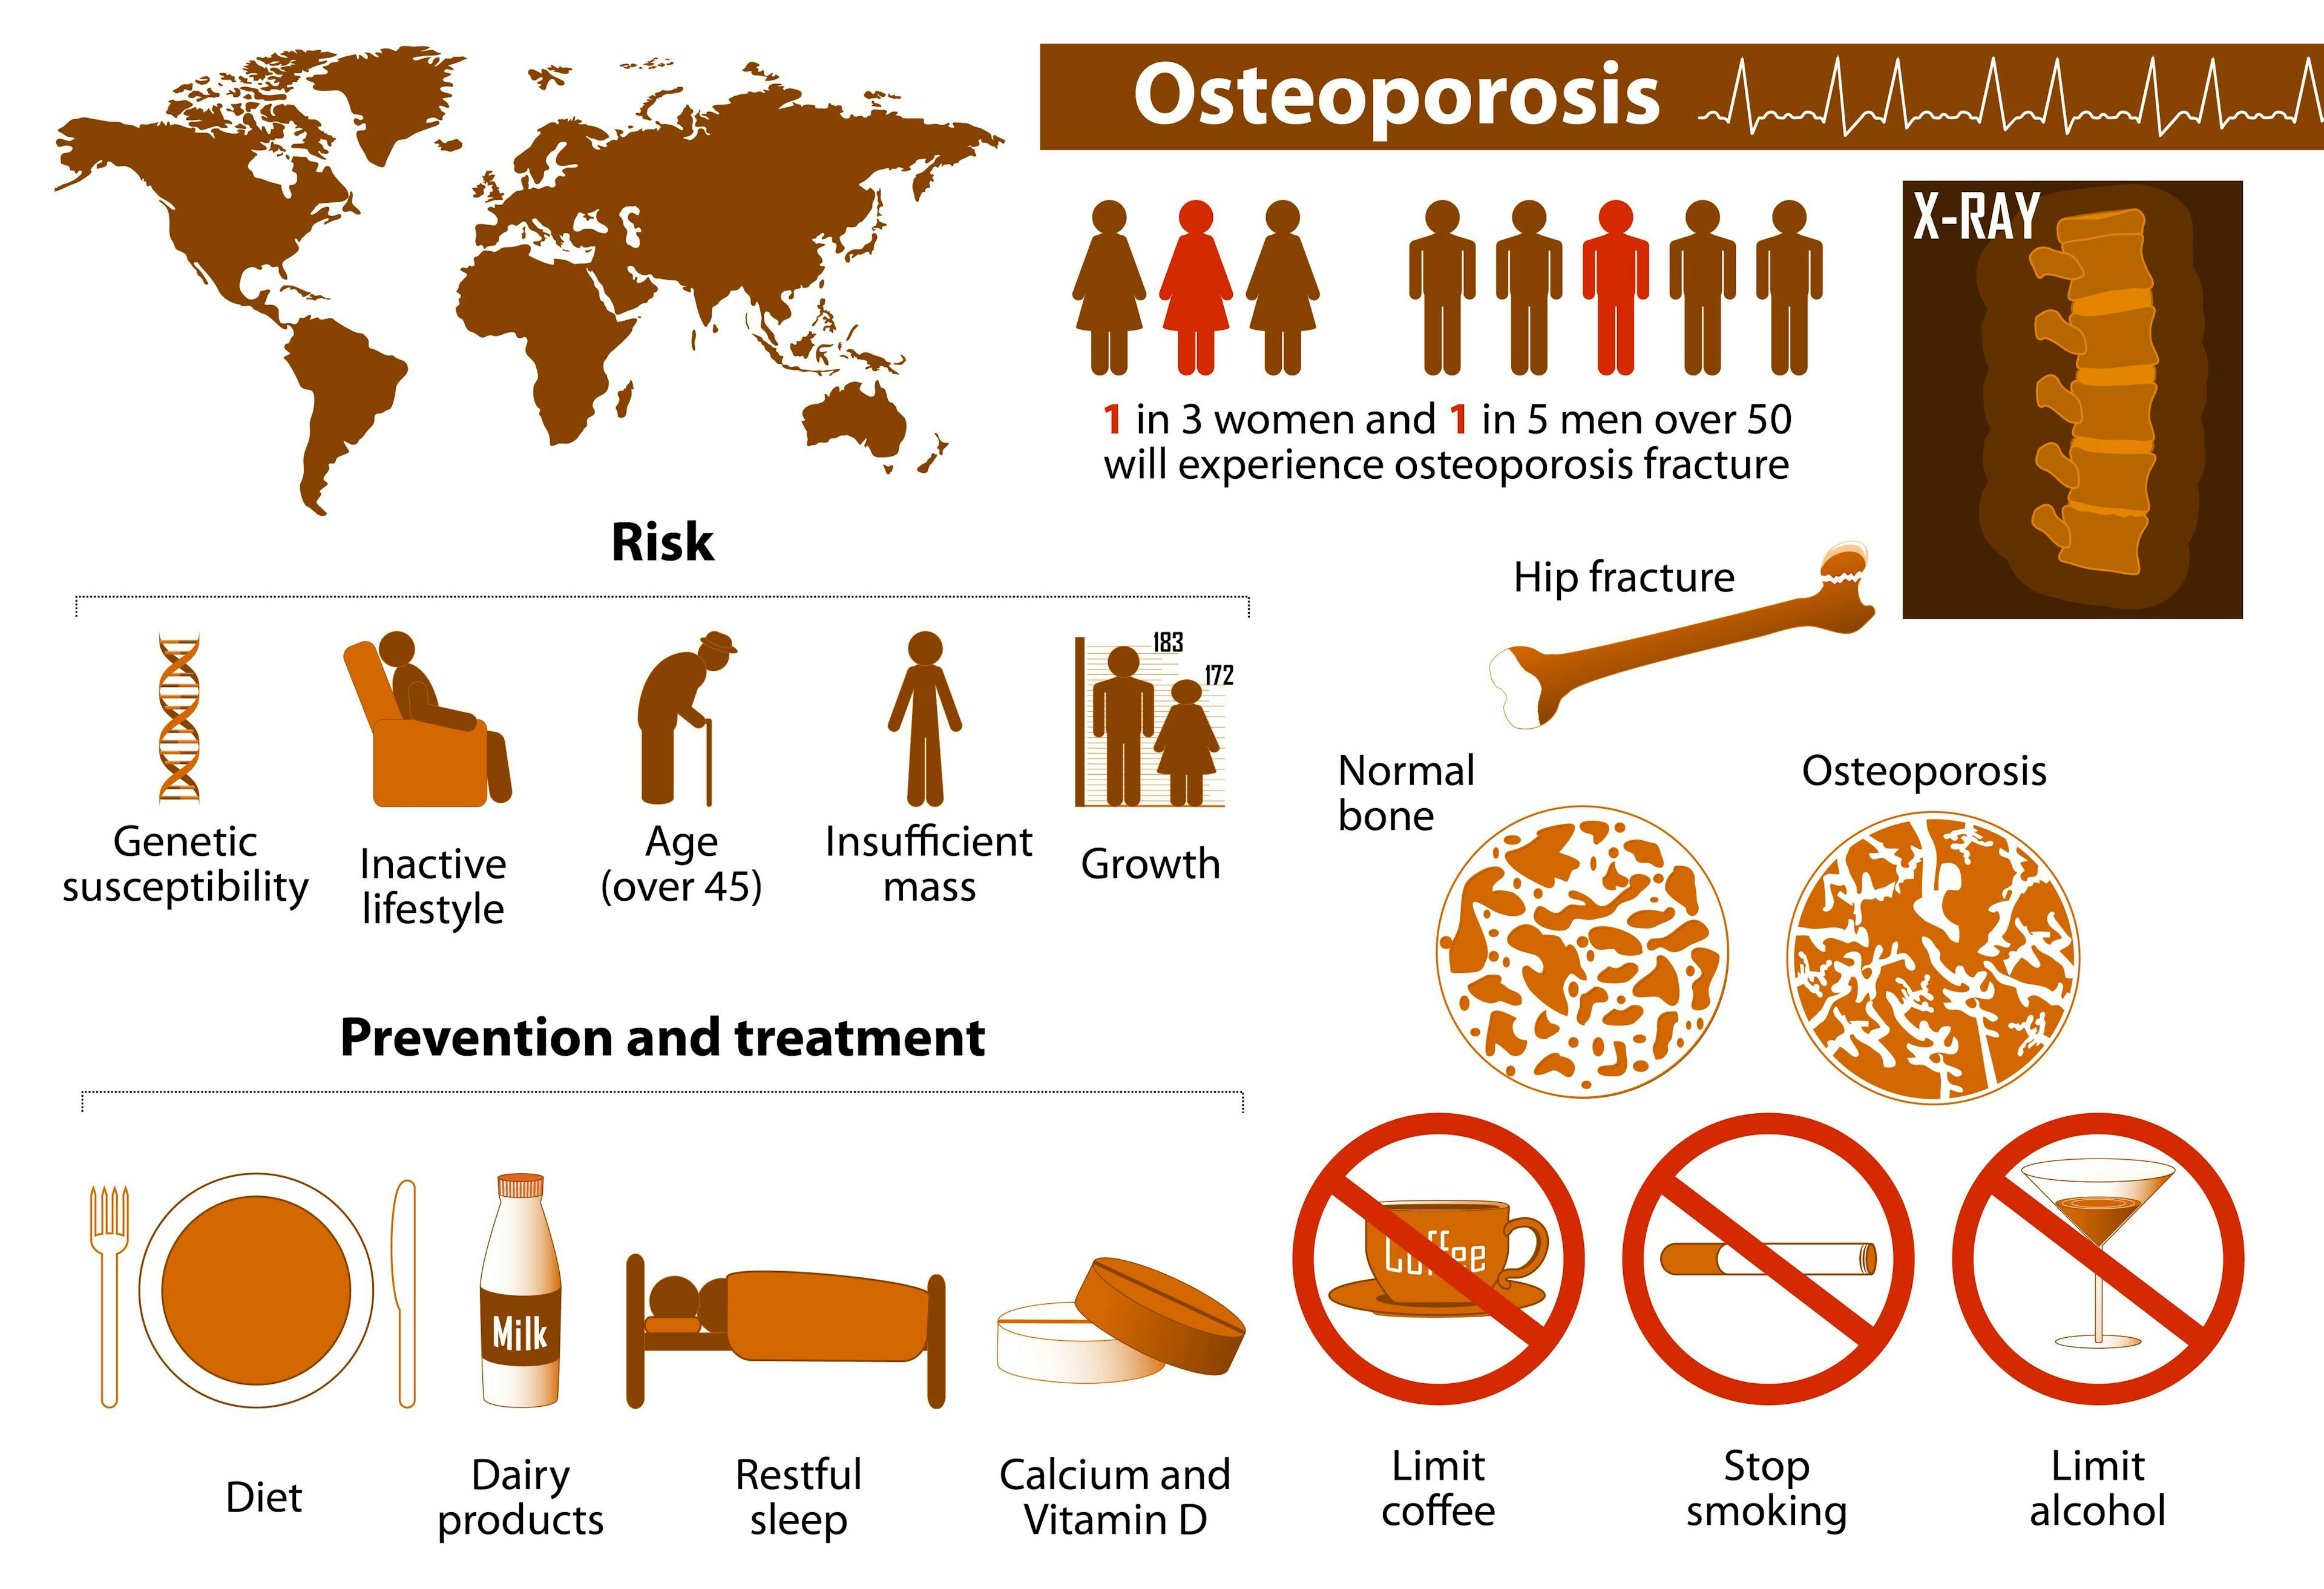 osteoporosis infographic | Image credit: designua - stock.adobe.com